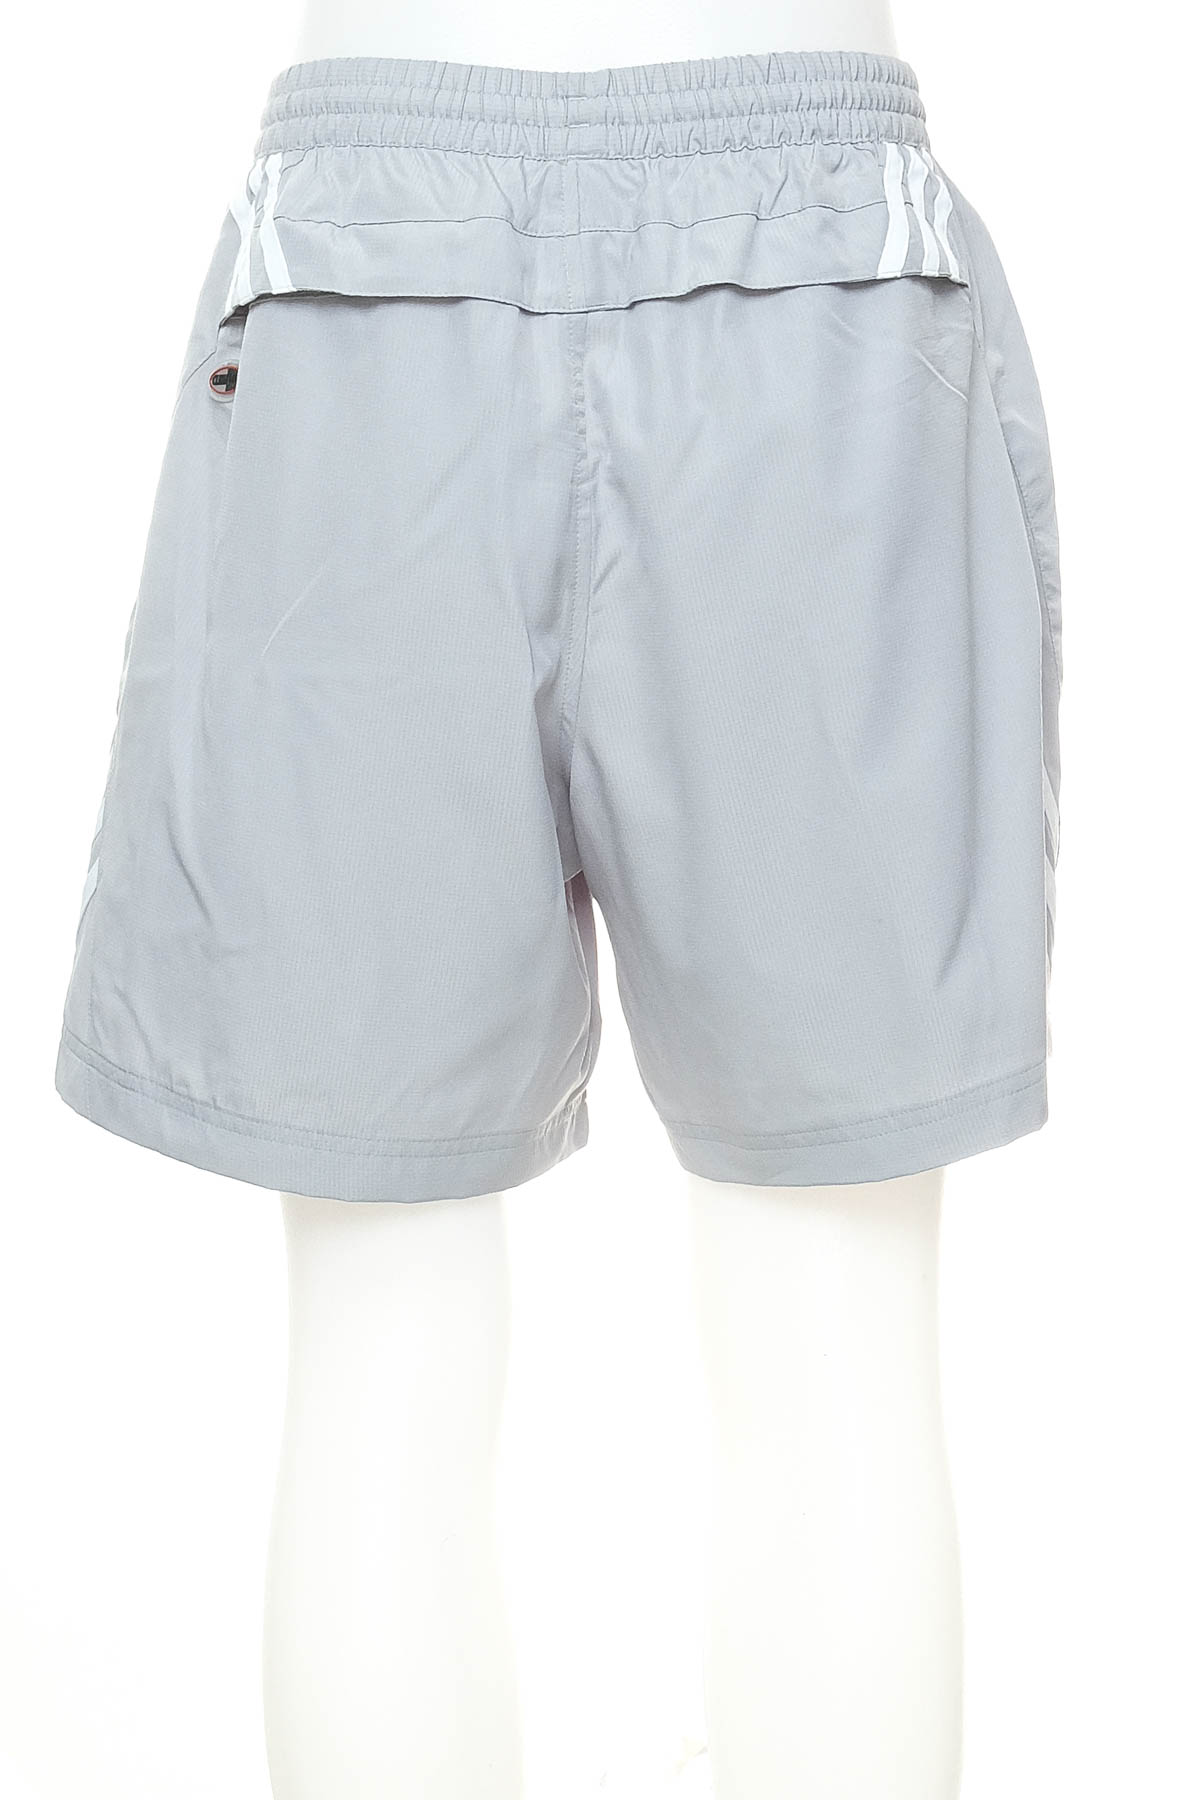 Men's shorts - Adidas - 1